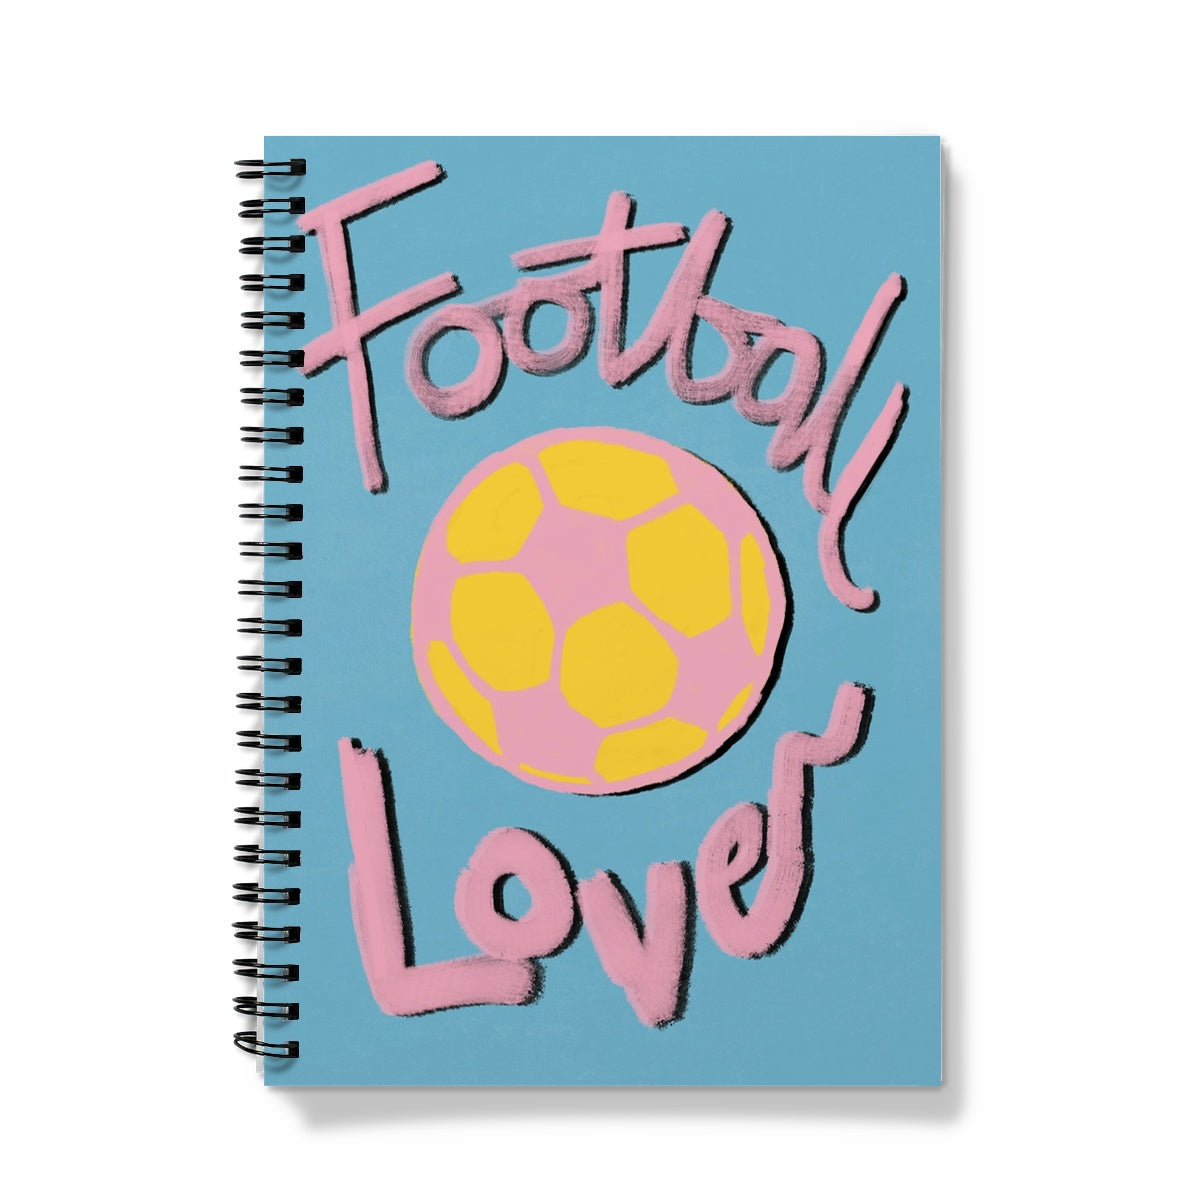 Football Lover Print - Blue, Yellow, Pink Notebook